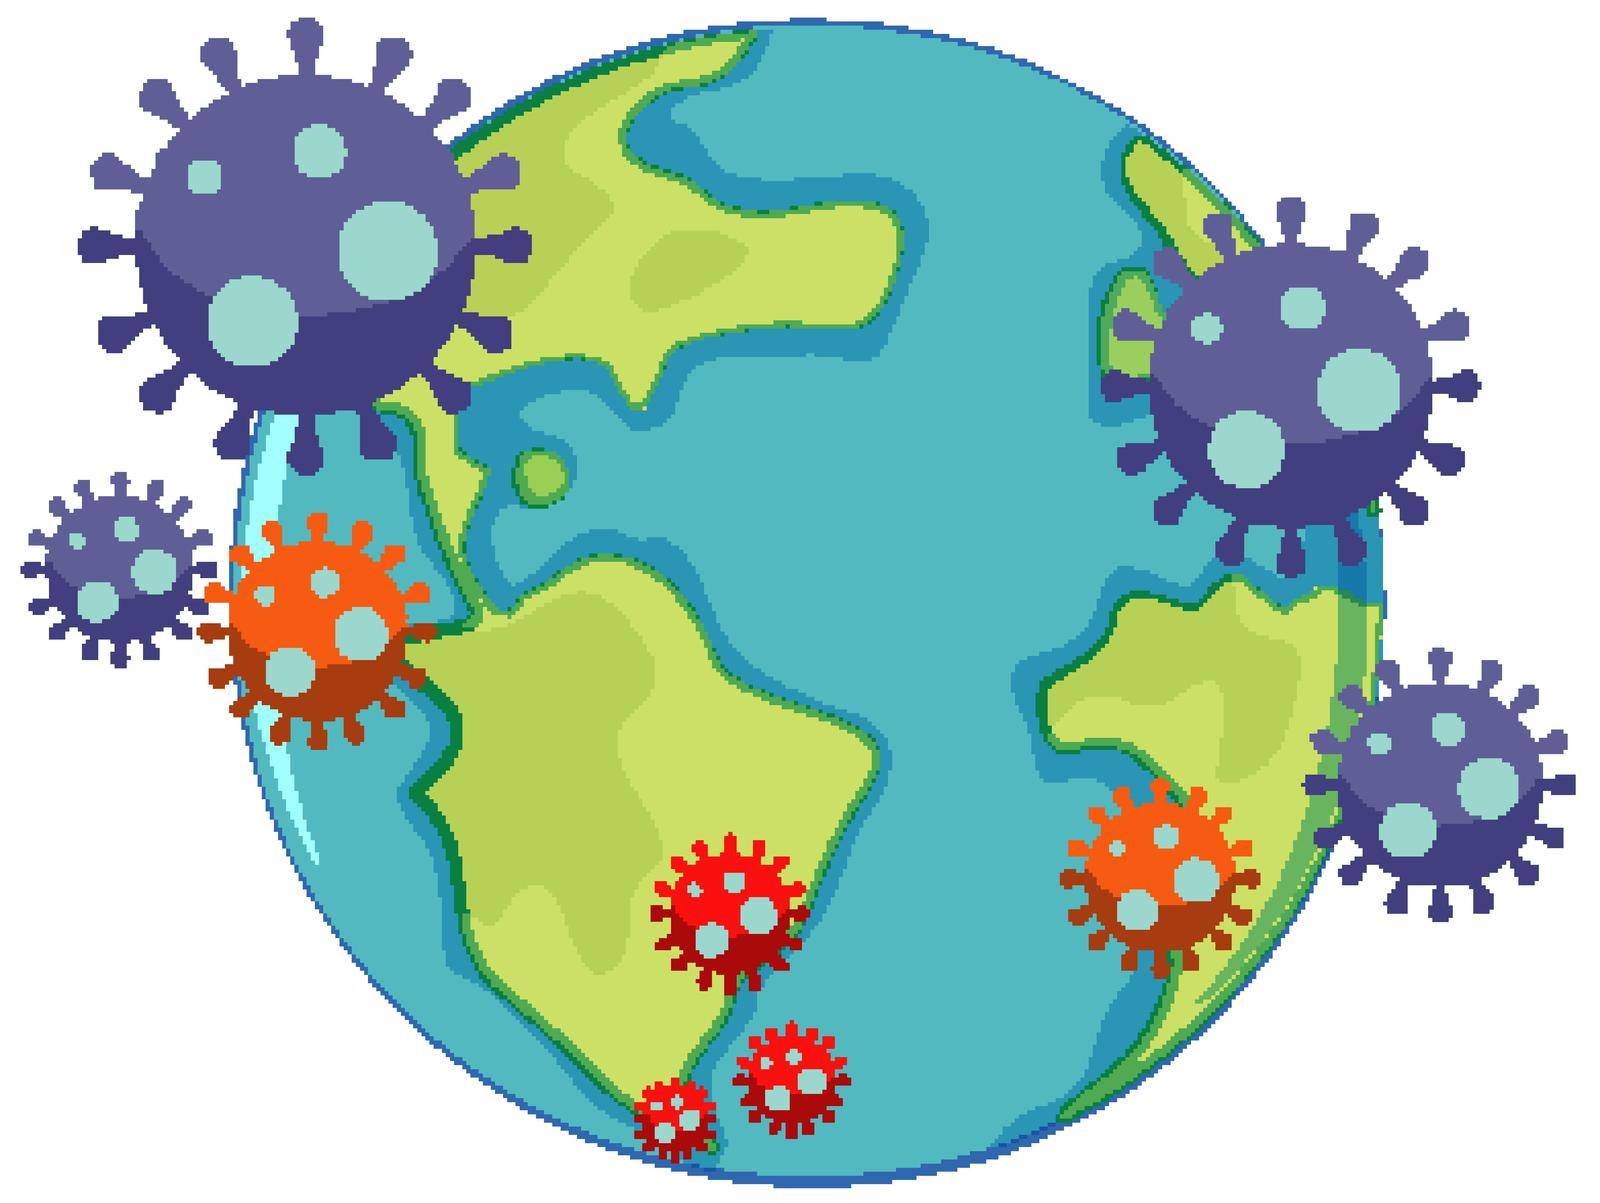 Coronavirus icon with earth globe icon illustration